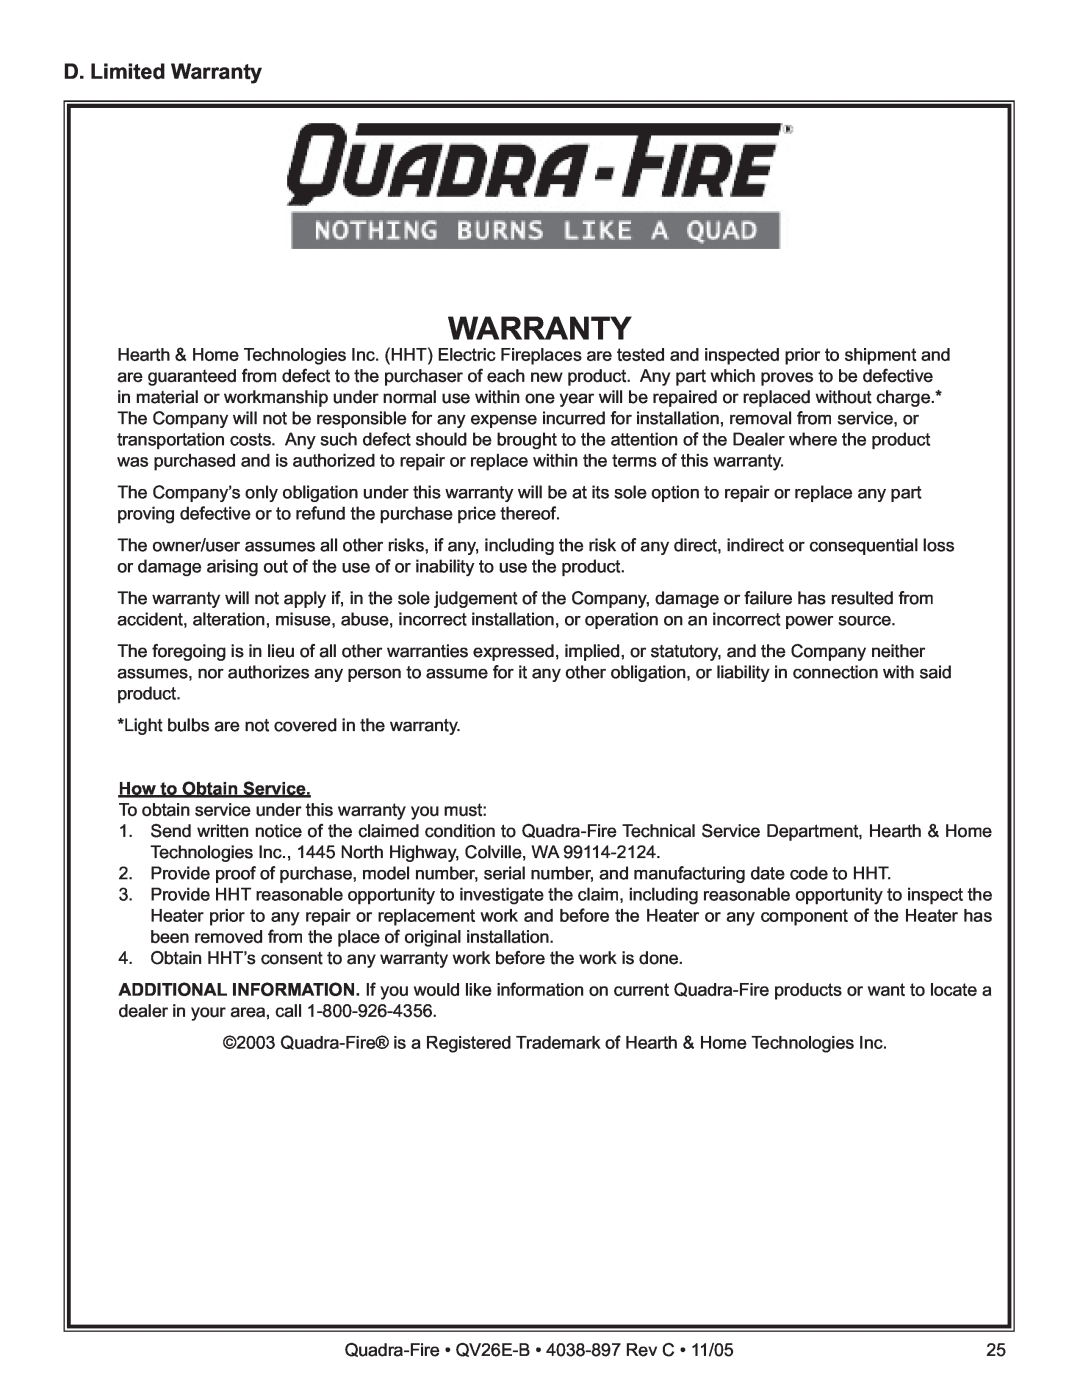 Quadra-Fire QV26E-B owner manual D. Limited Warranty, How to Obtain Service 